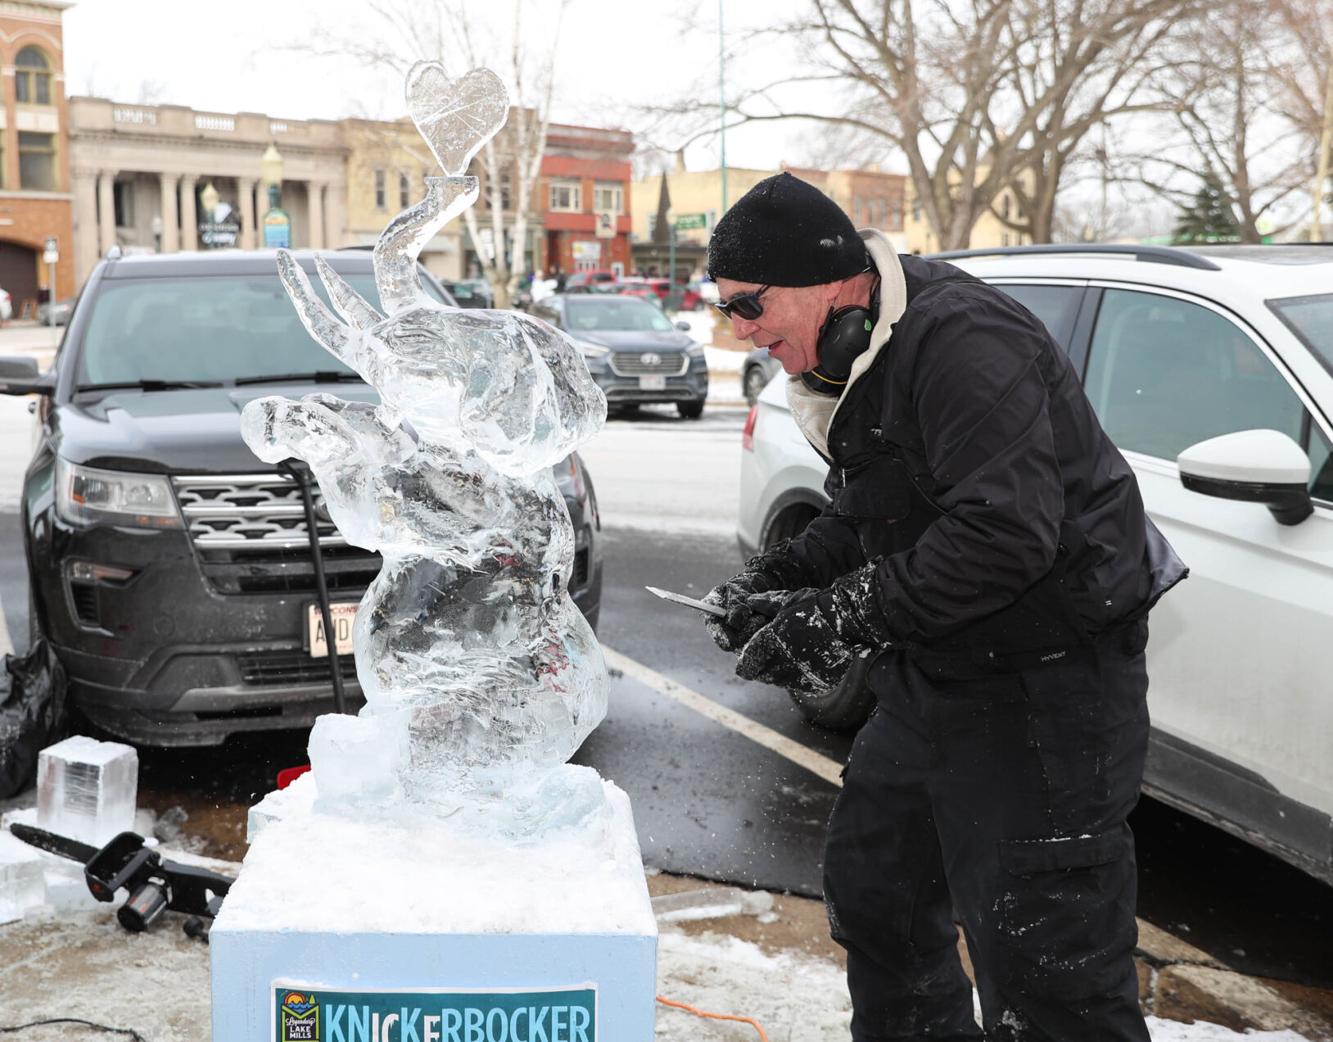 Lake Mills’ Knickerbocker Ice Festival returns Local News